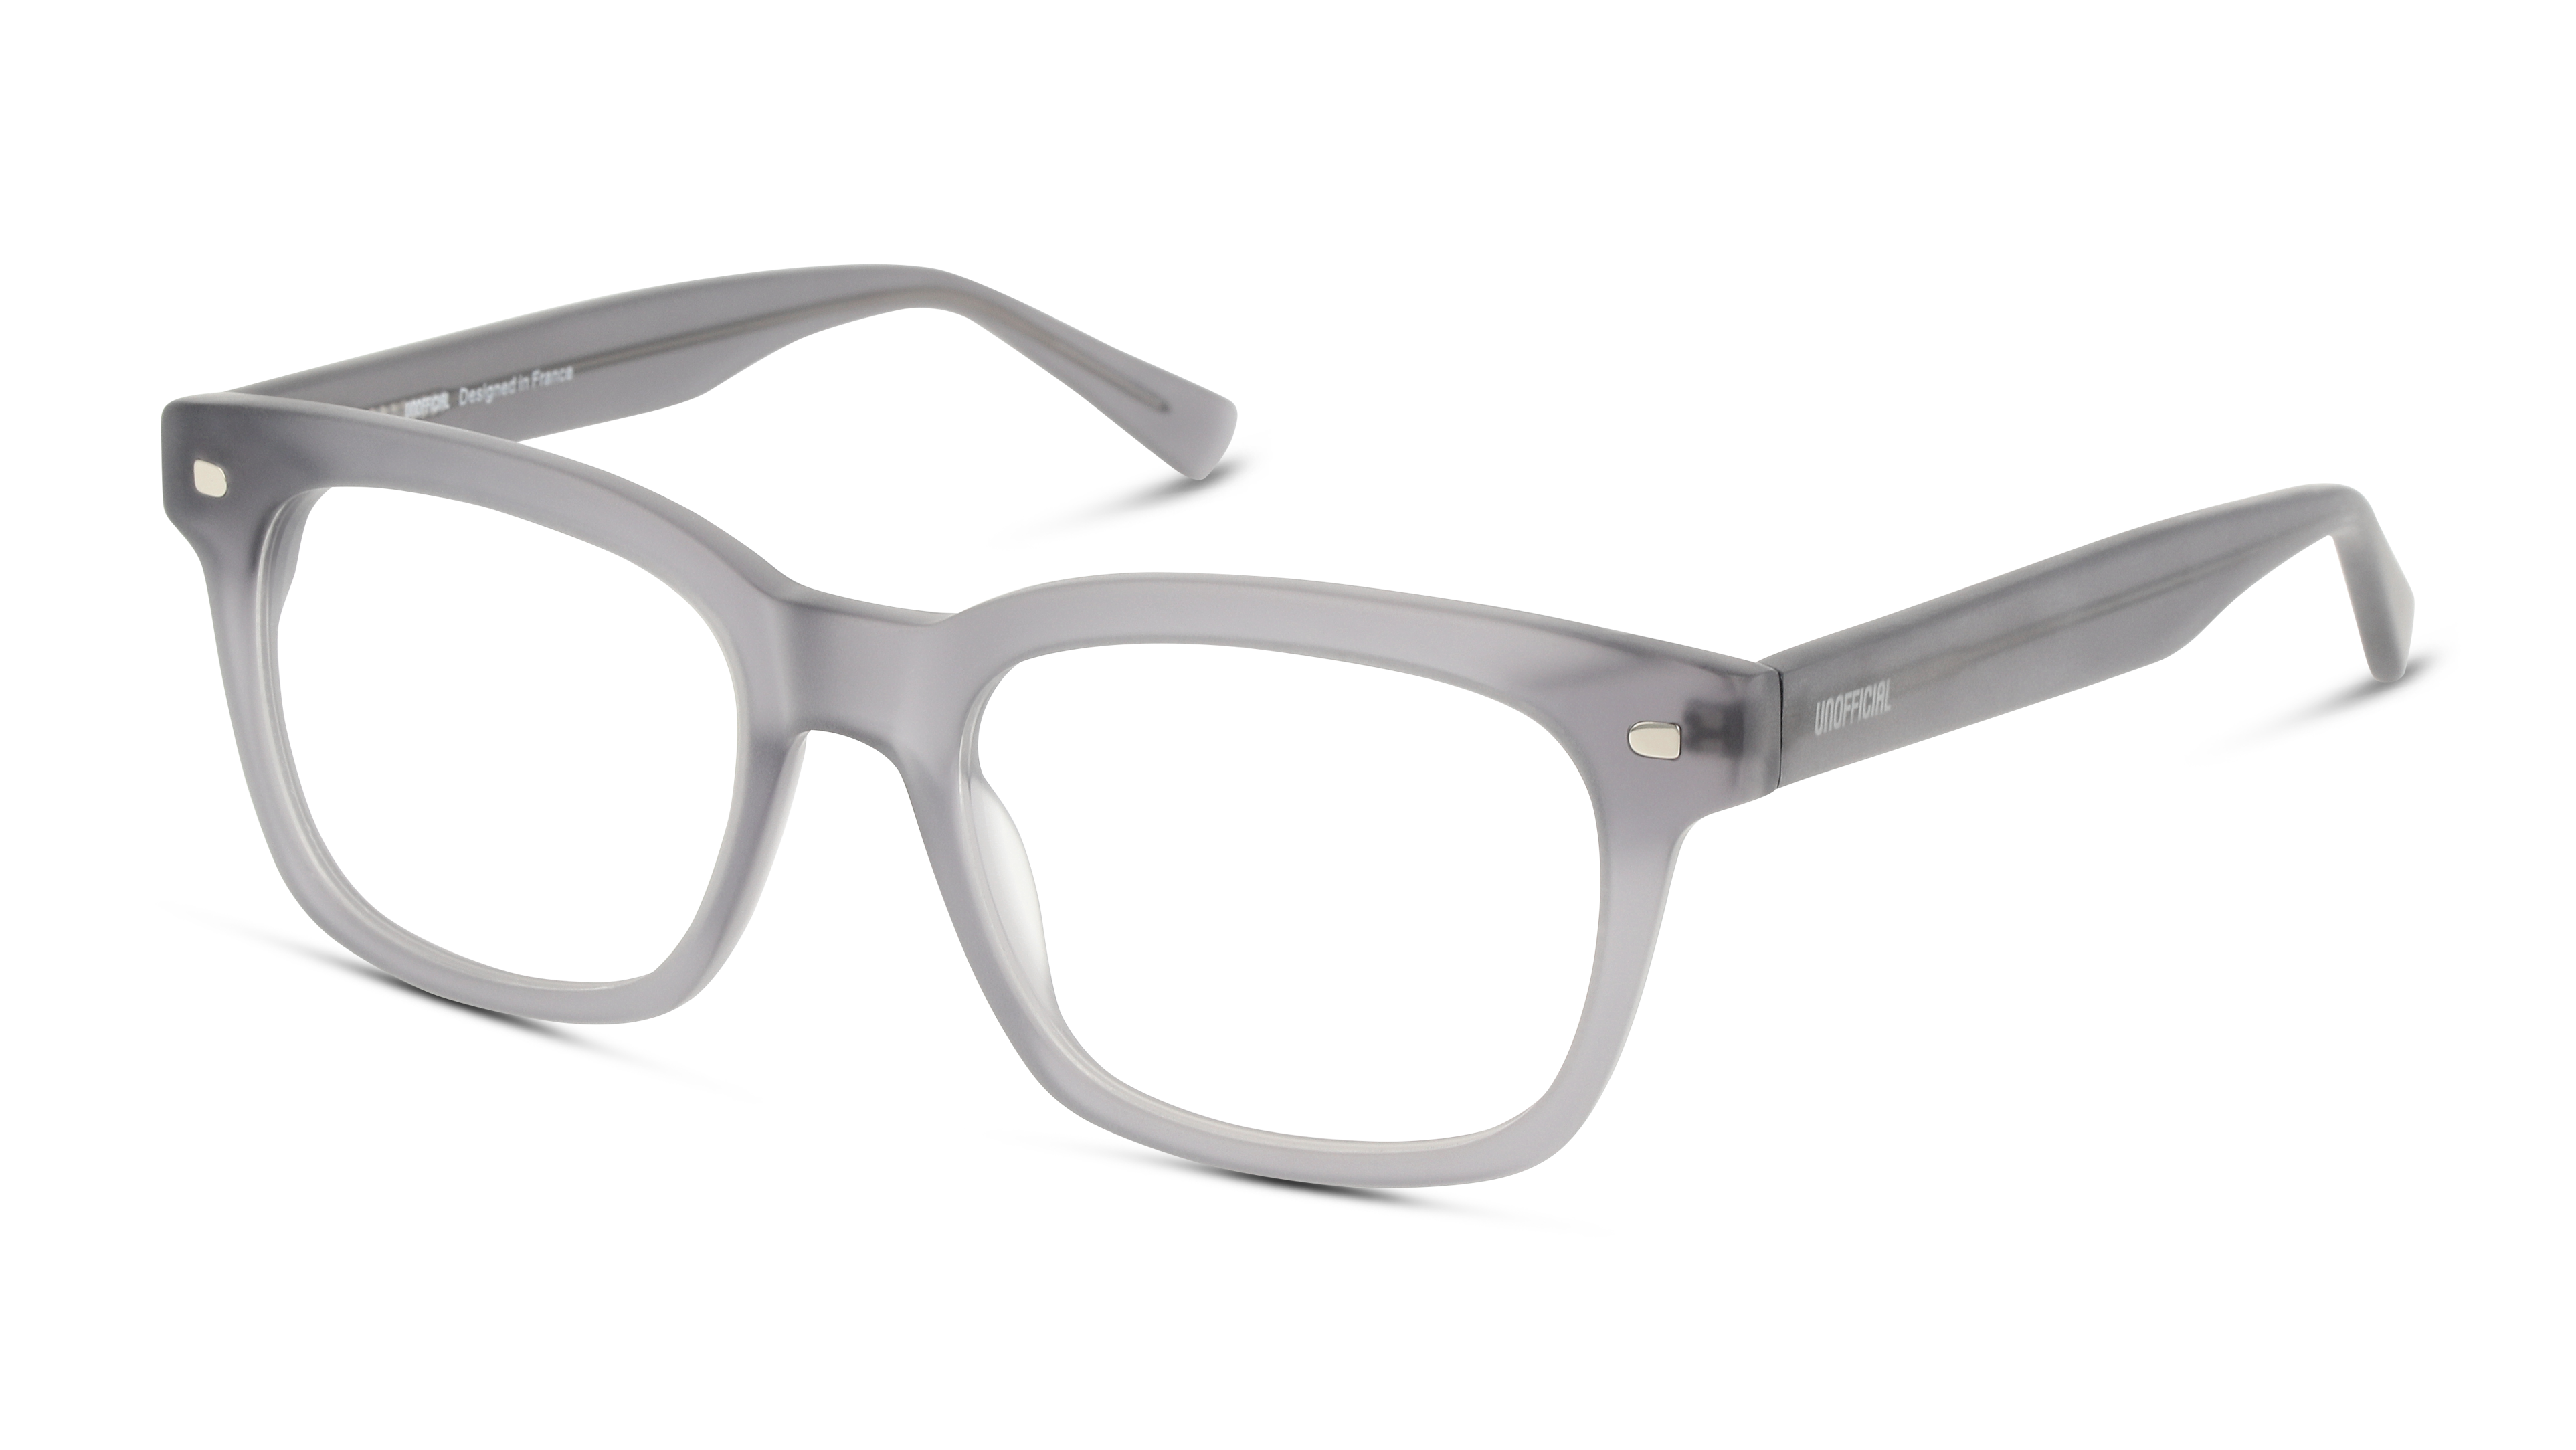 Angle_Left01 Unofficial UNOM0156 (BB00) Glasses Transparent / Black